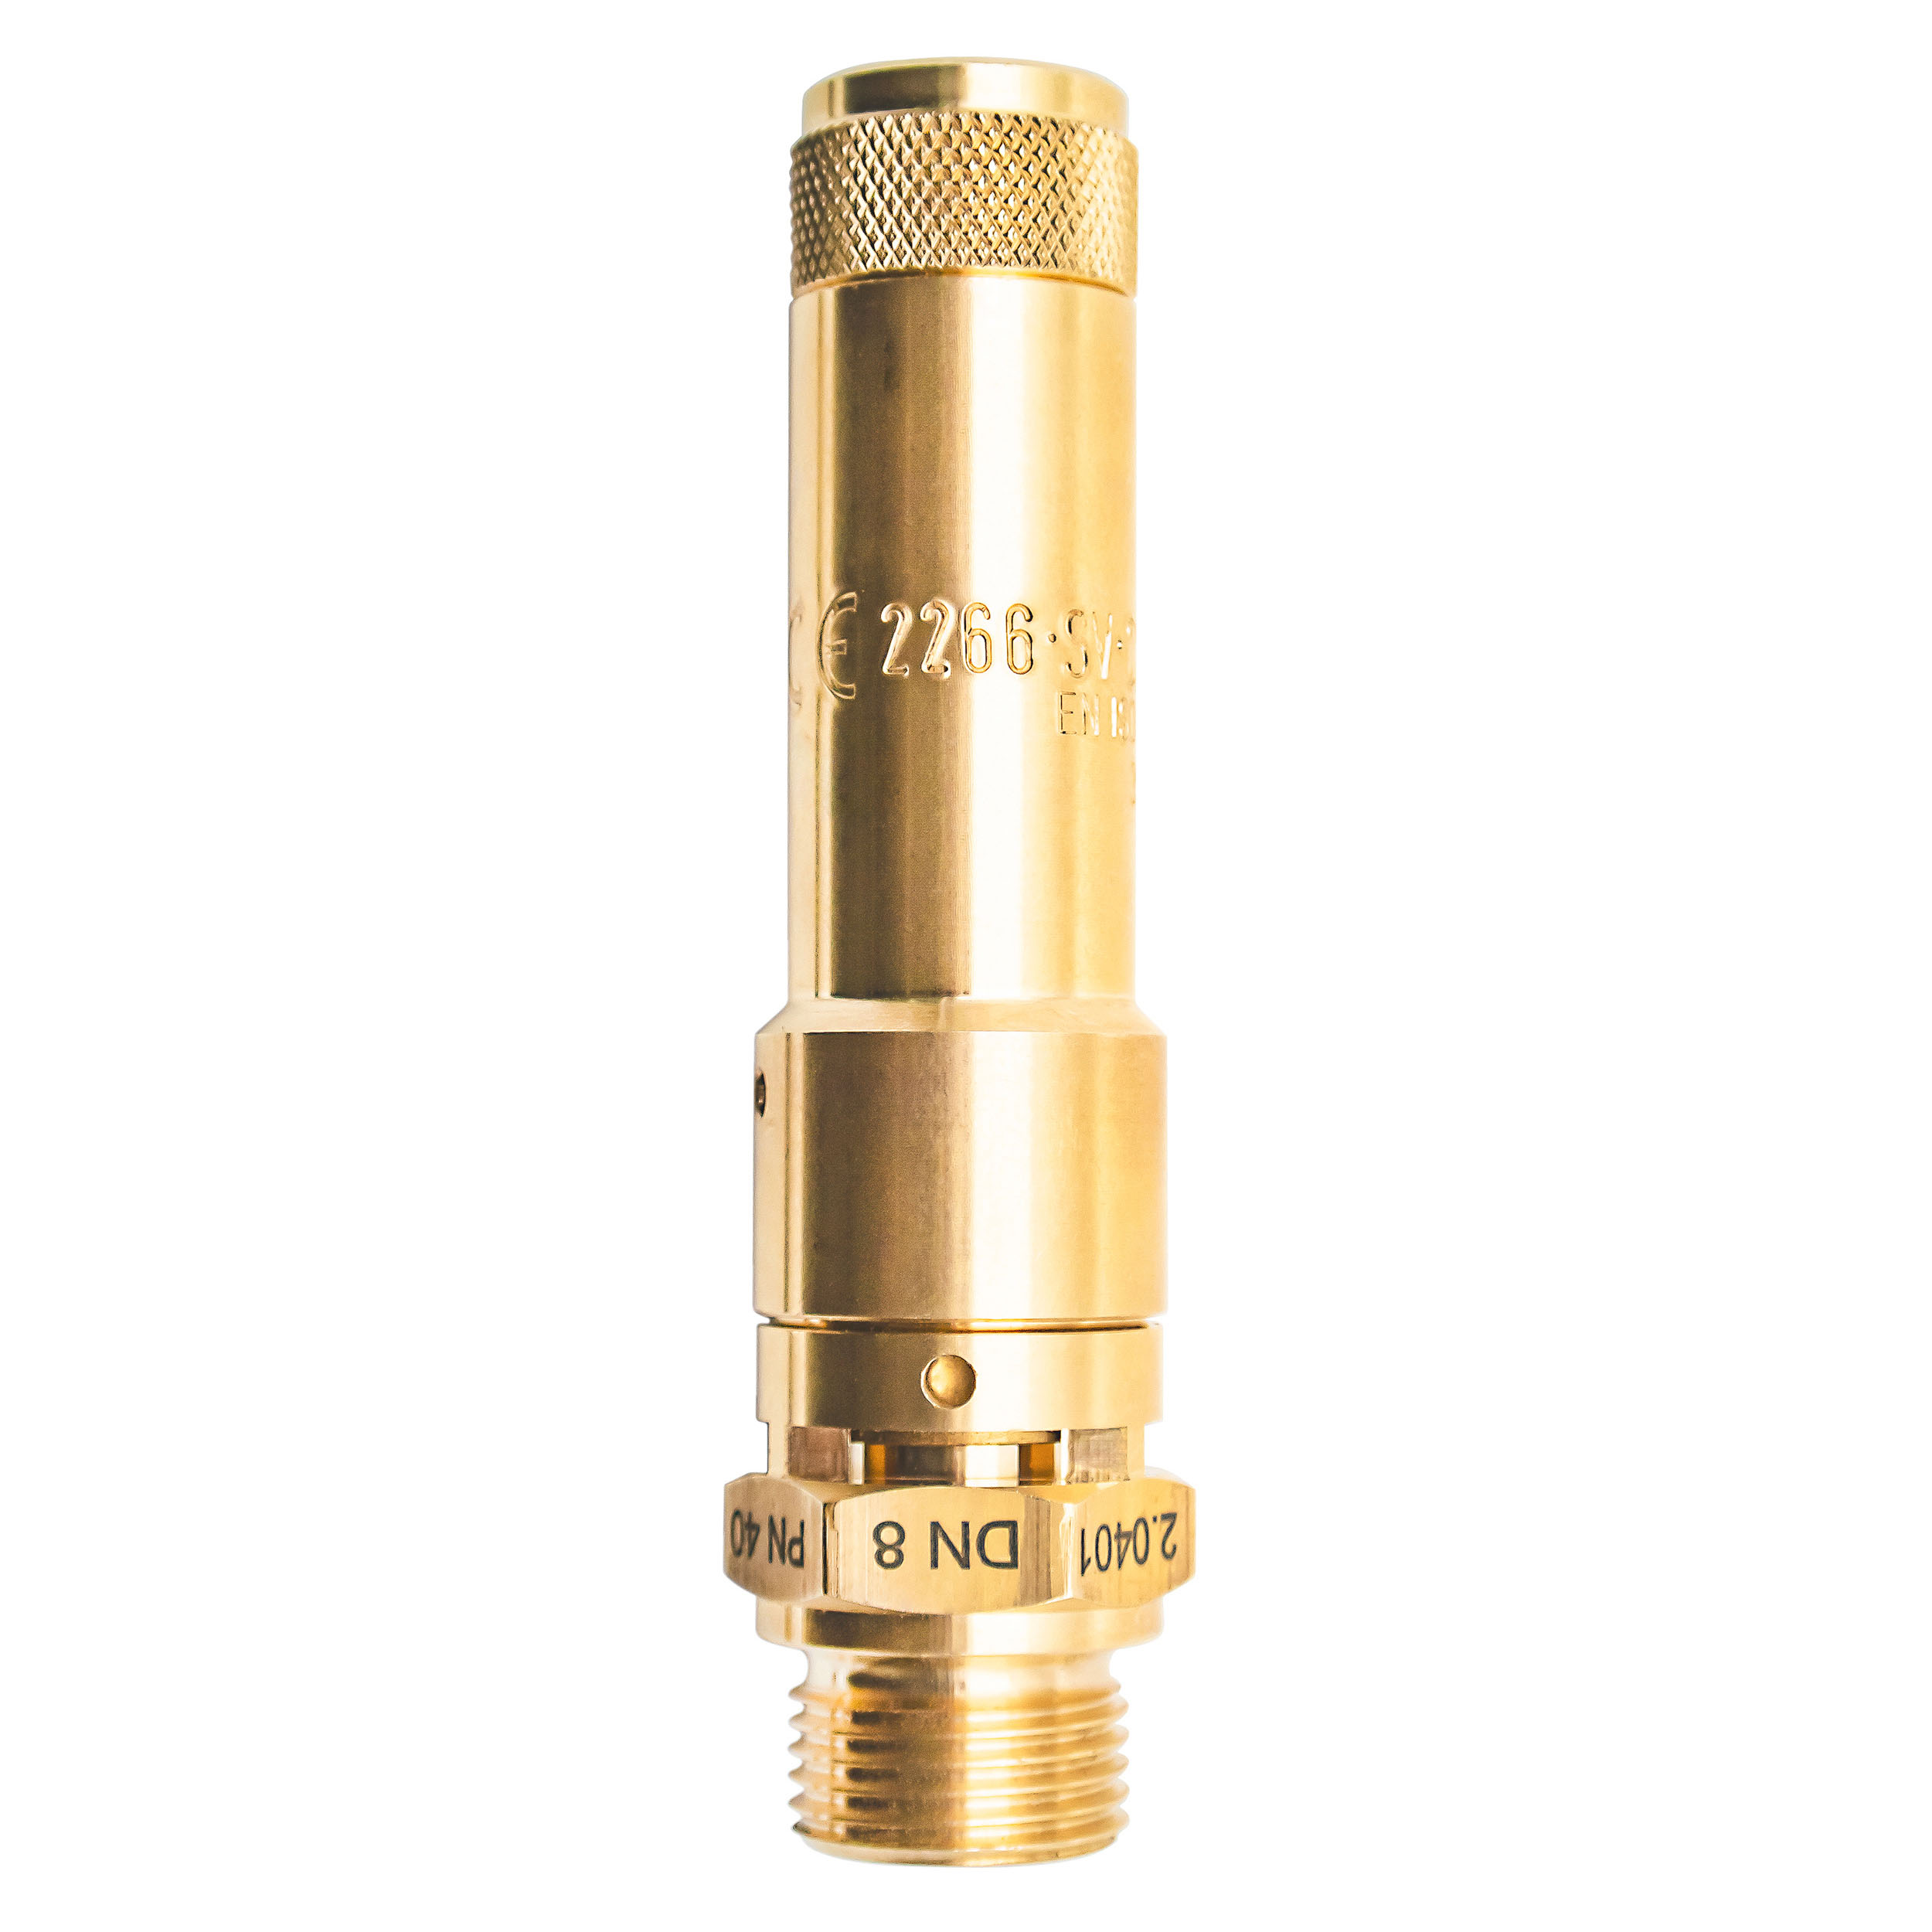 Savety valve component tested DN 8, G½, set pressure: 2.9 bar (42,05 psi)